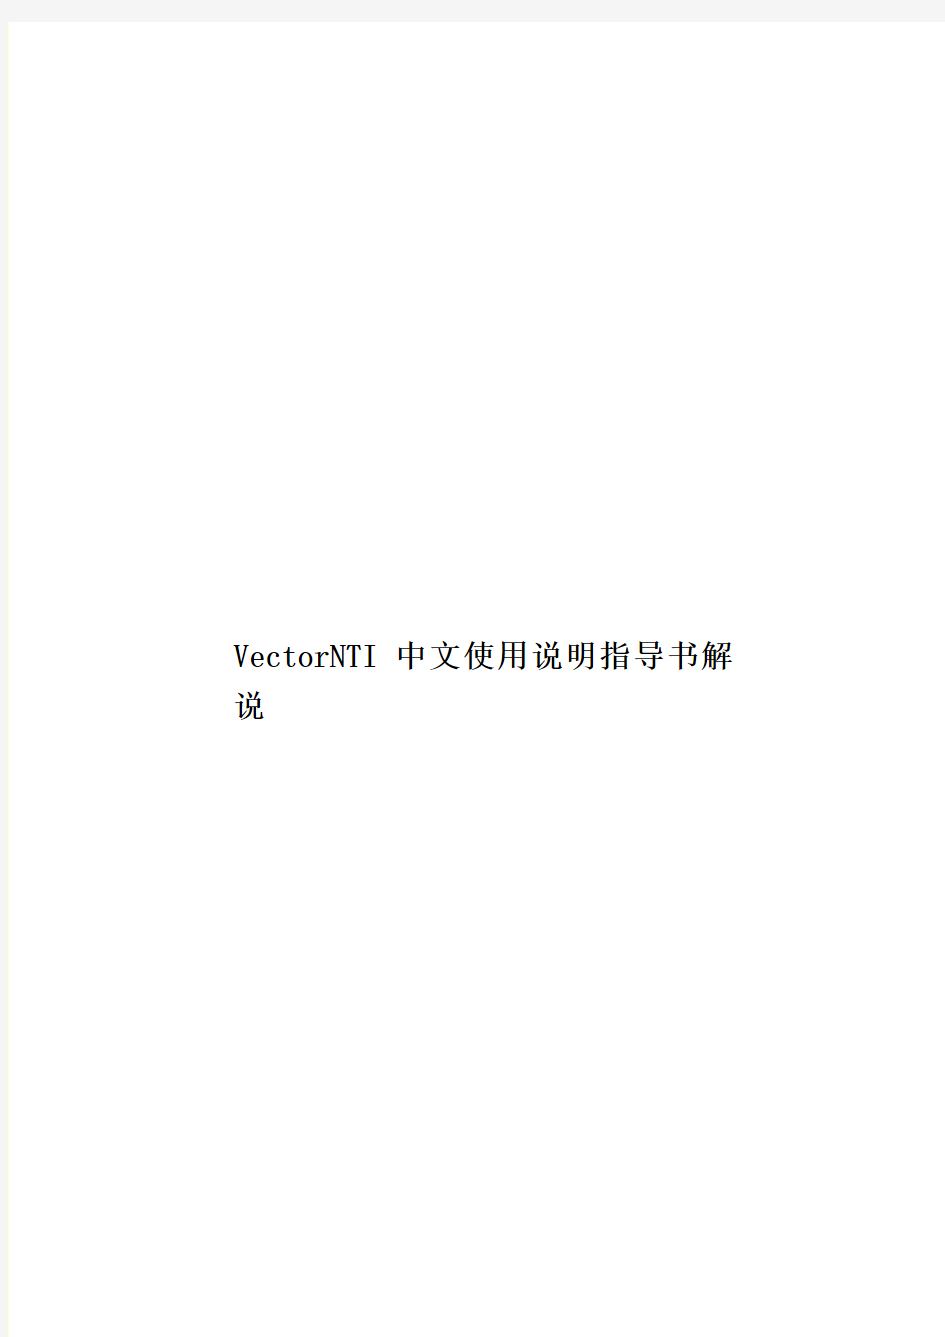 VectorNTI中文使用说明指导书解说